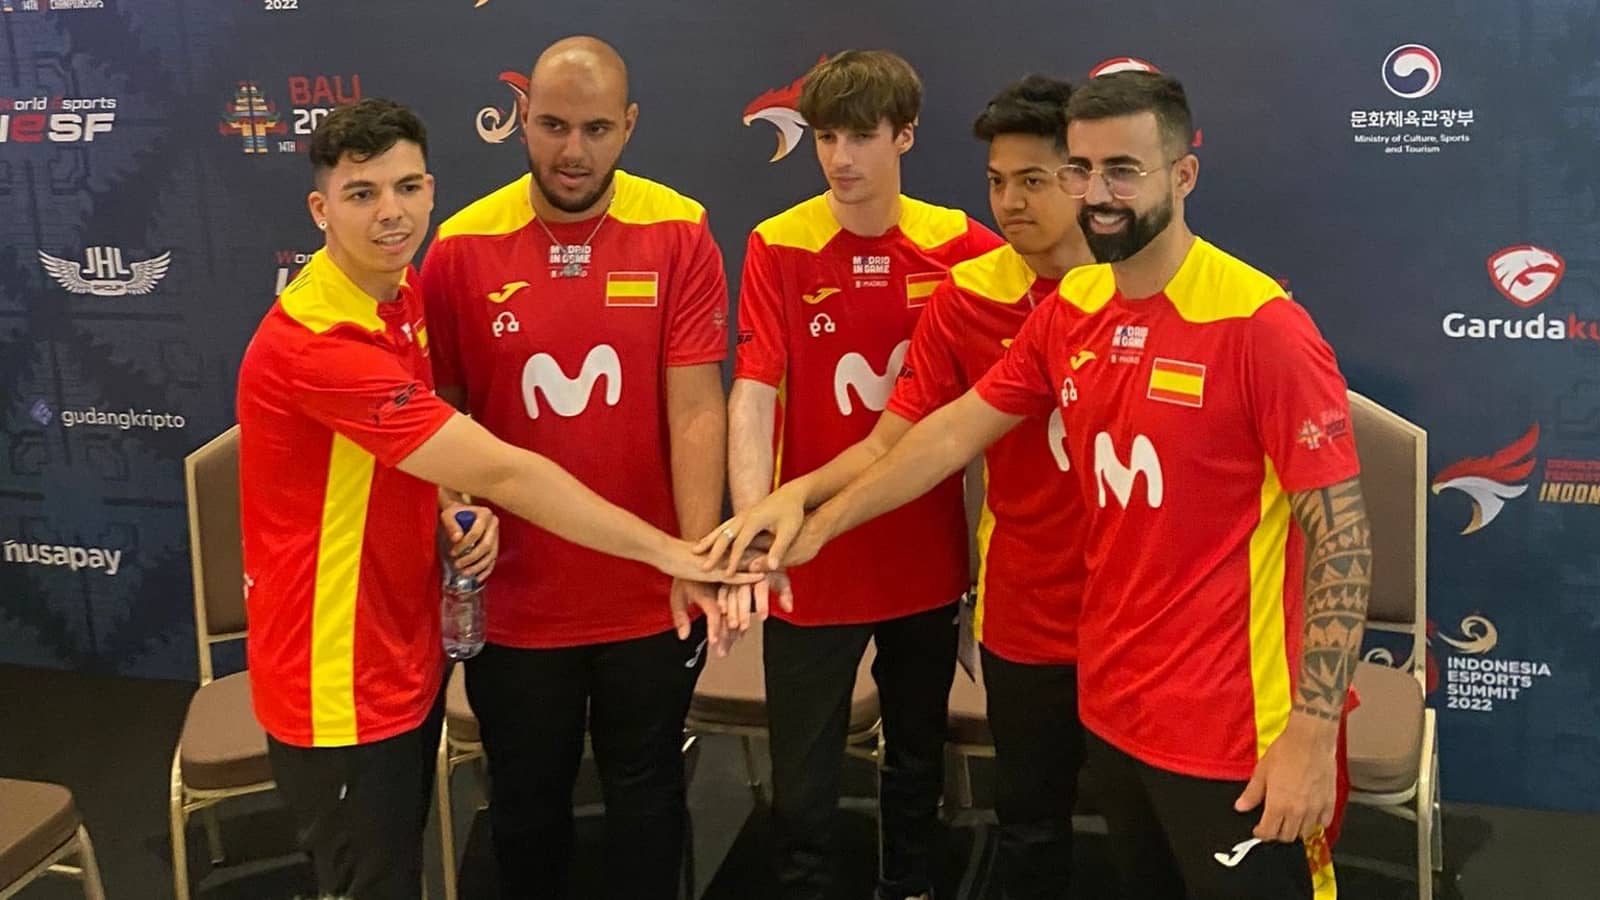 BIG Academy elimina a España del campeonato mundial de CS:GO